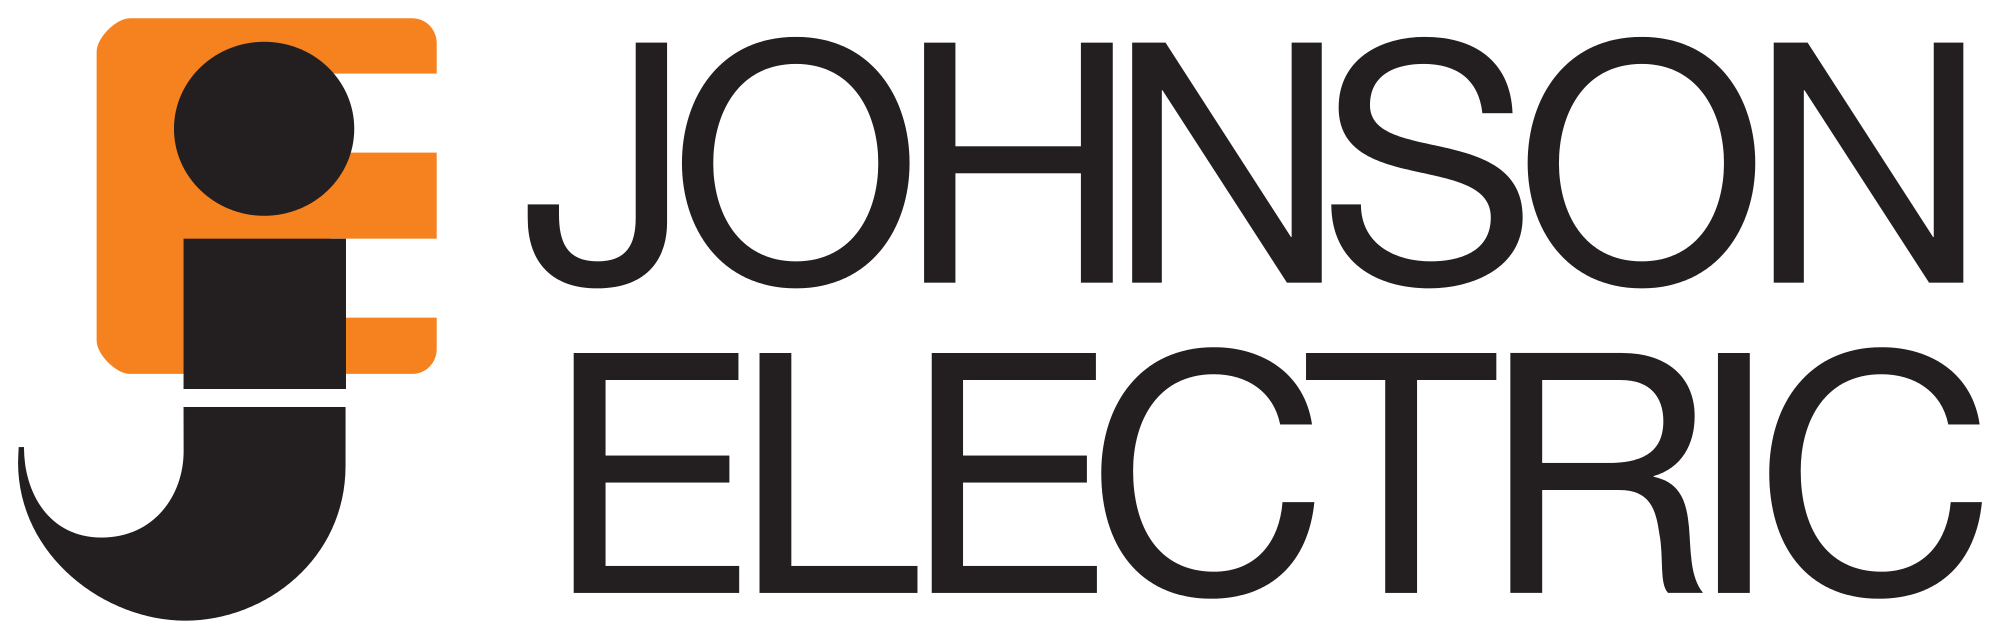 Johnson Electric logo svg